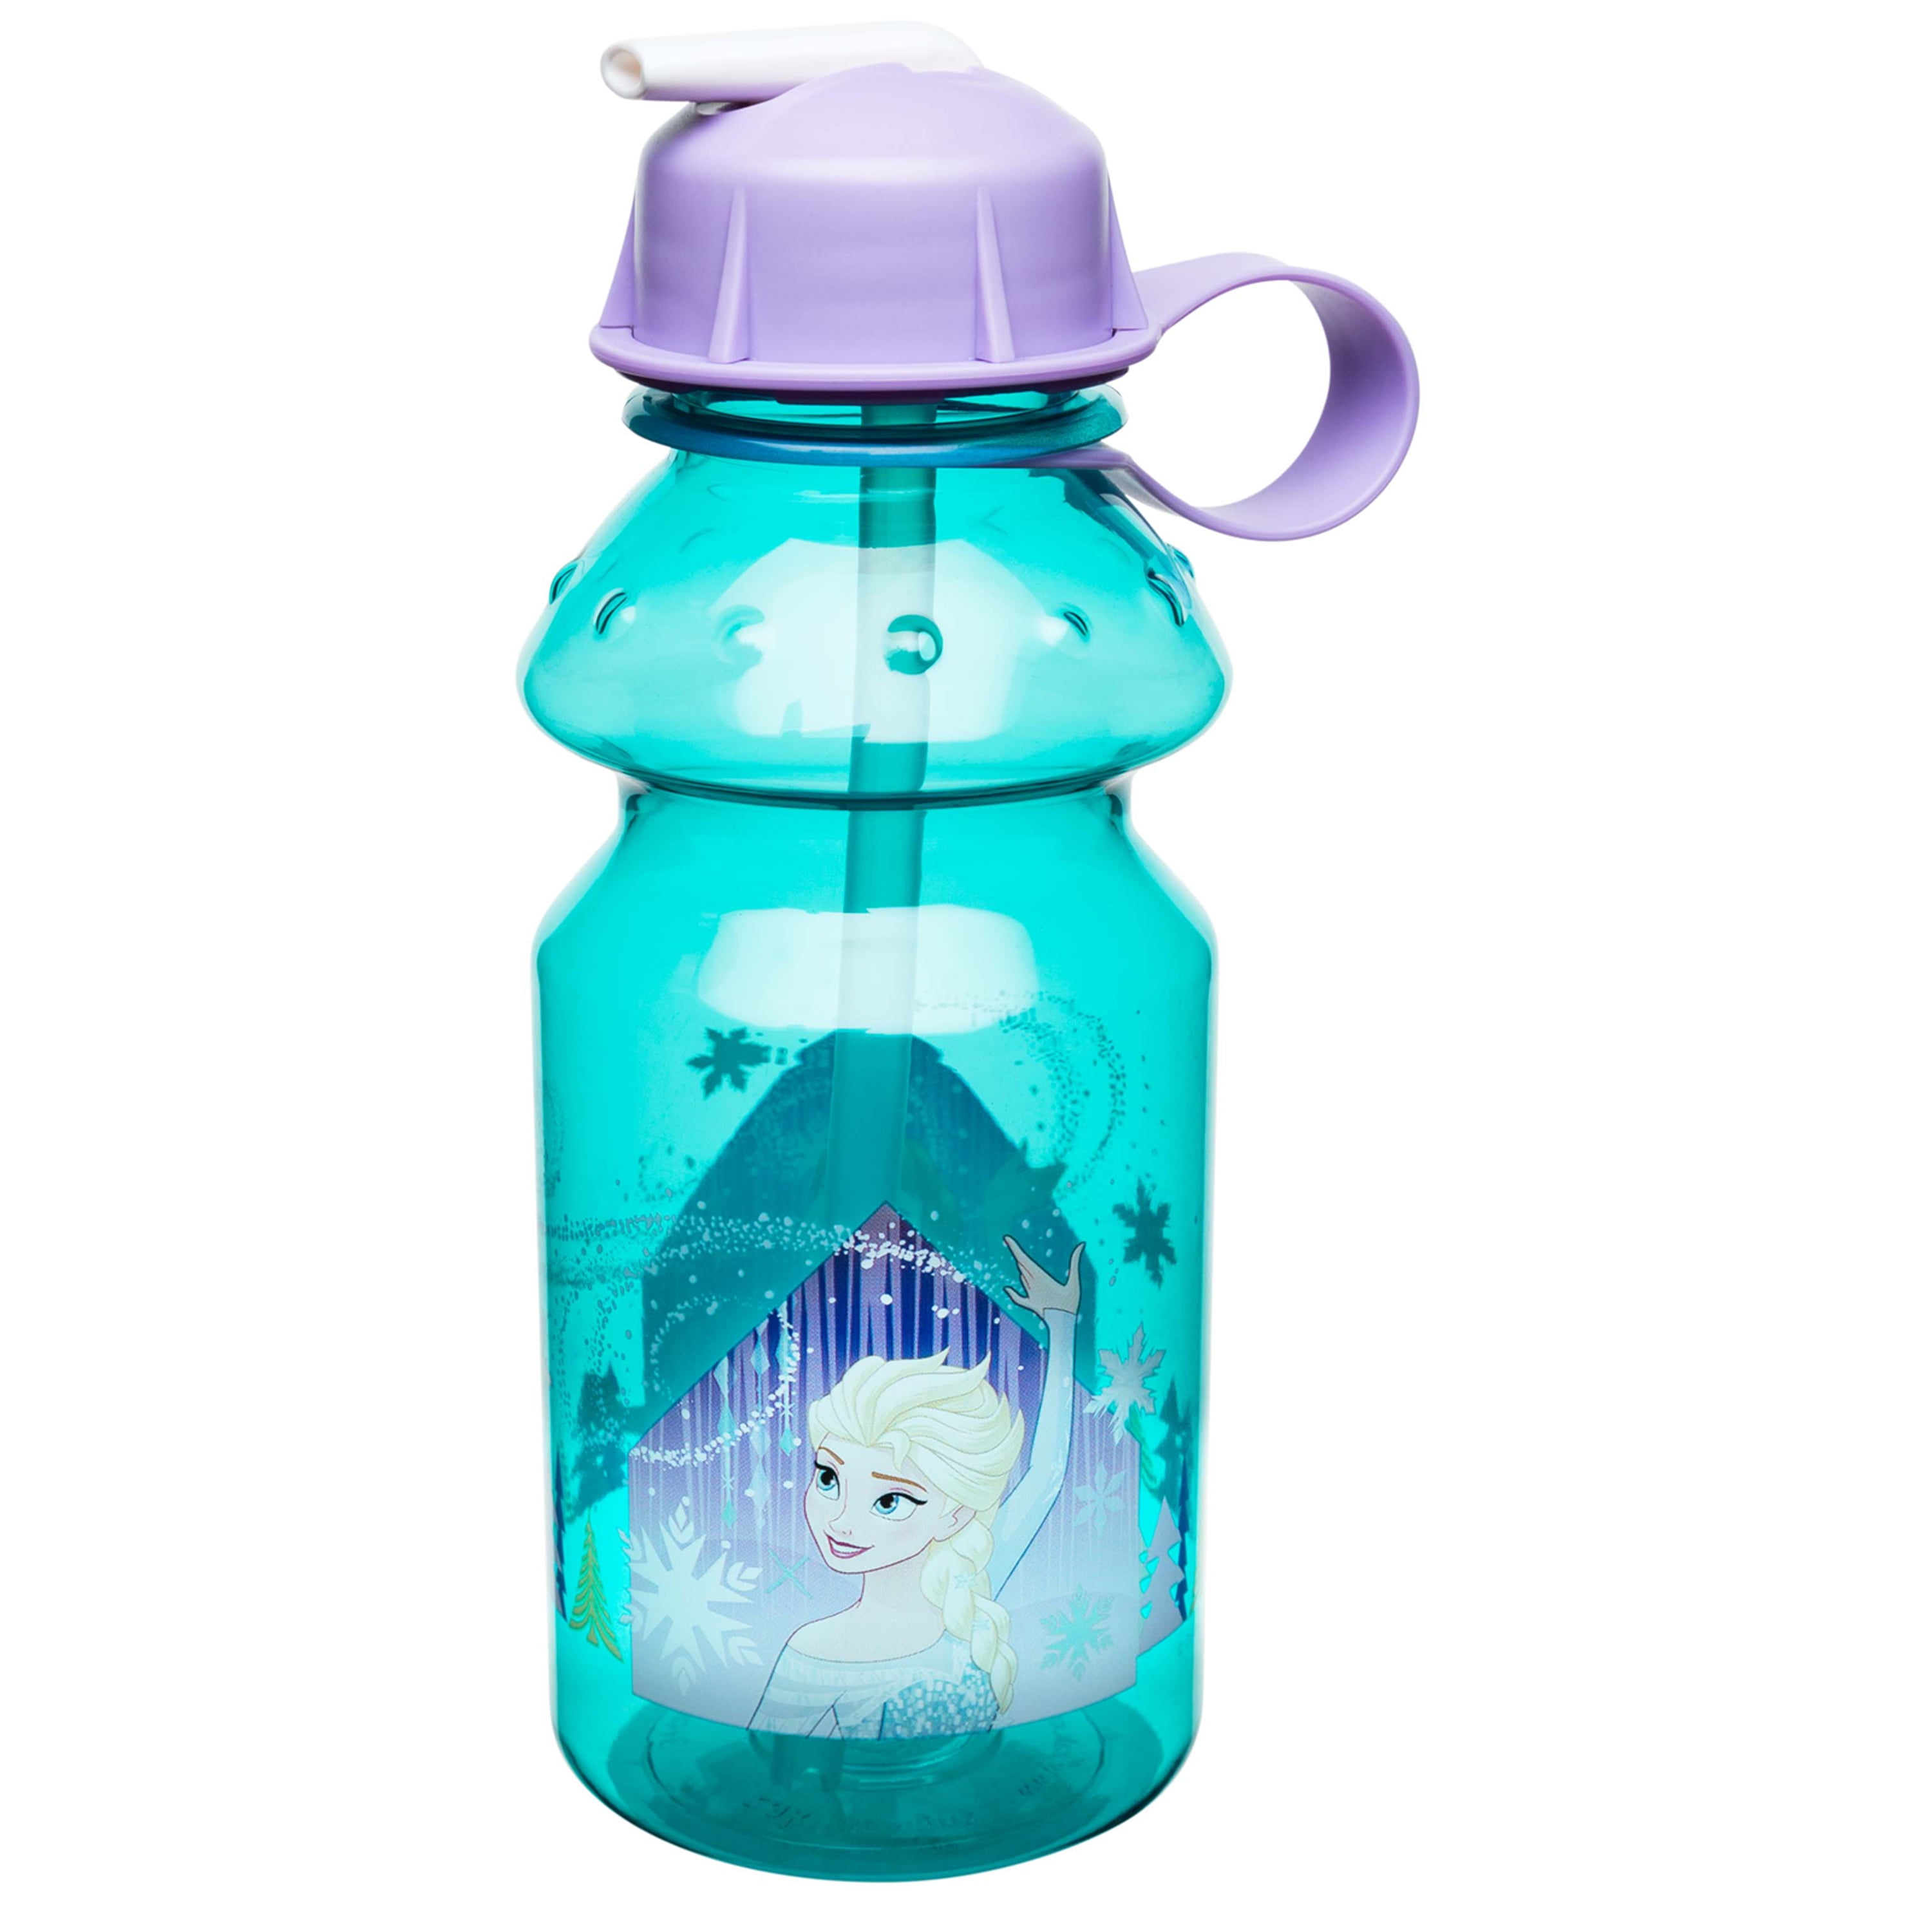 Disney FROZEN Elsa Anna water bottle 14 oz flip straw NEW 